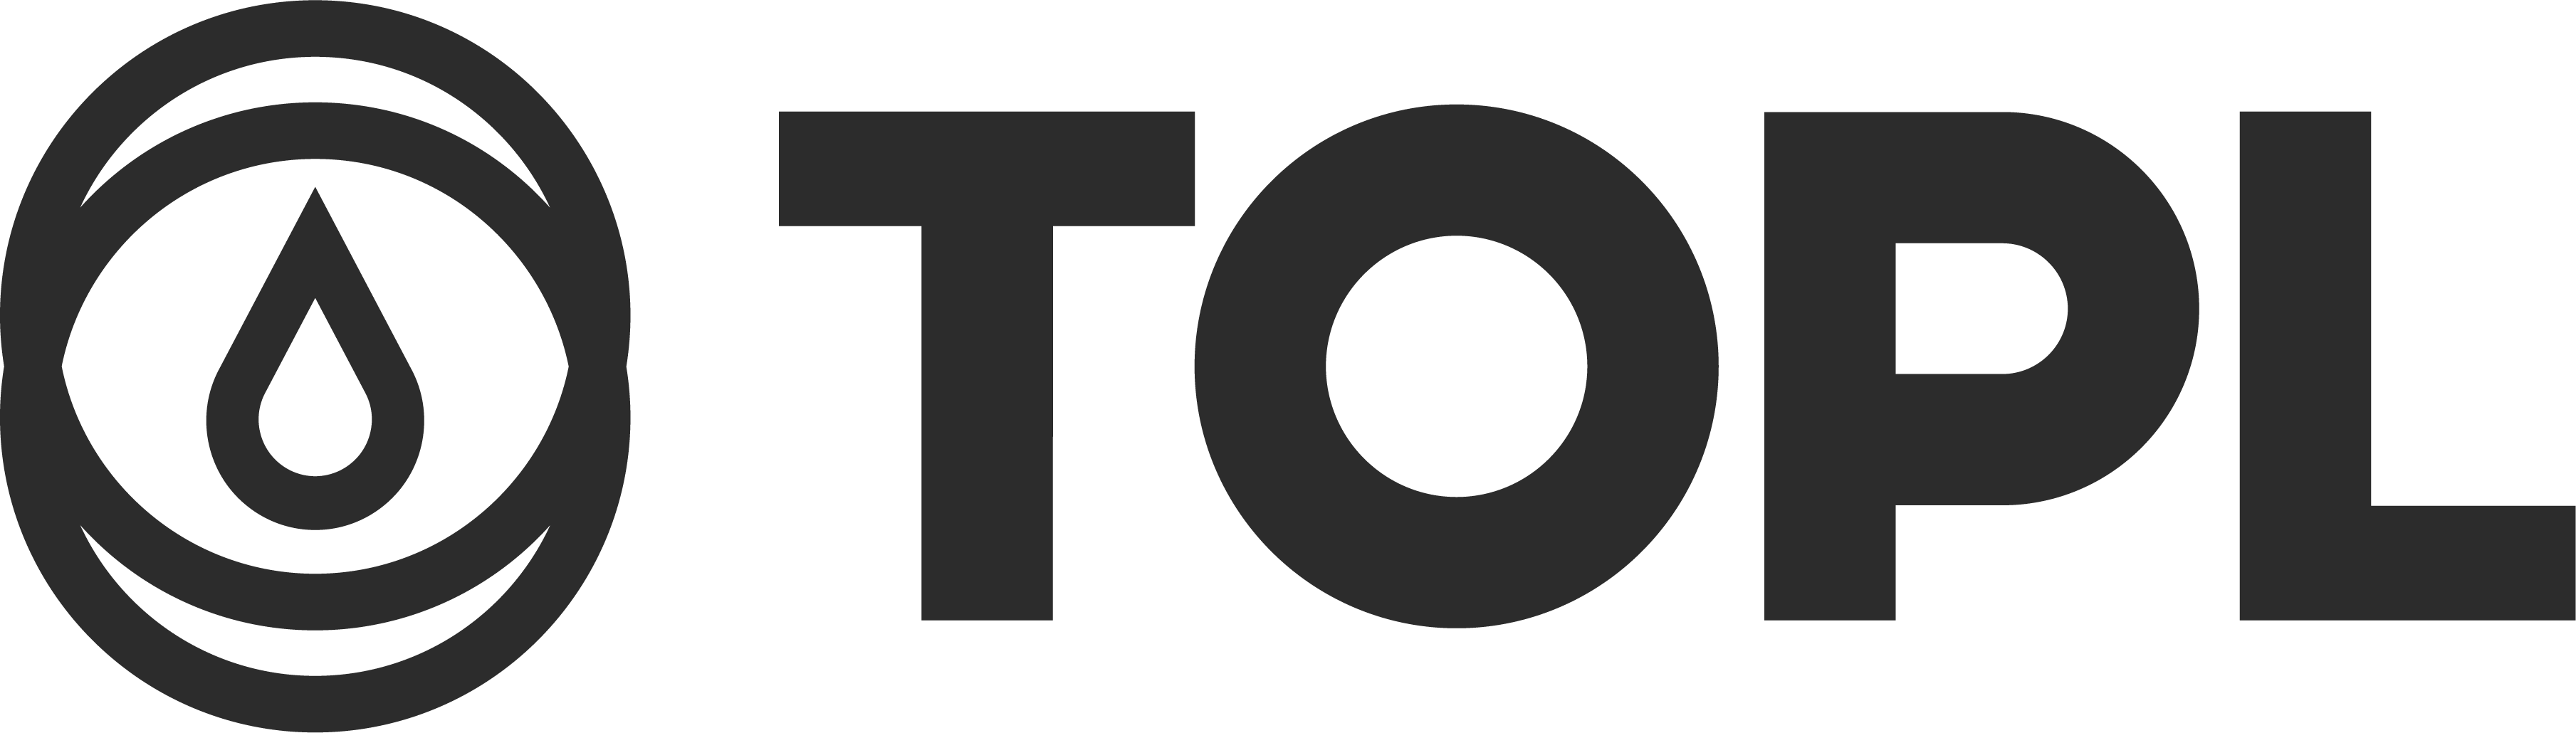 Topl Logo